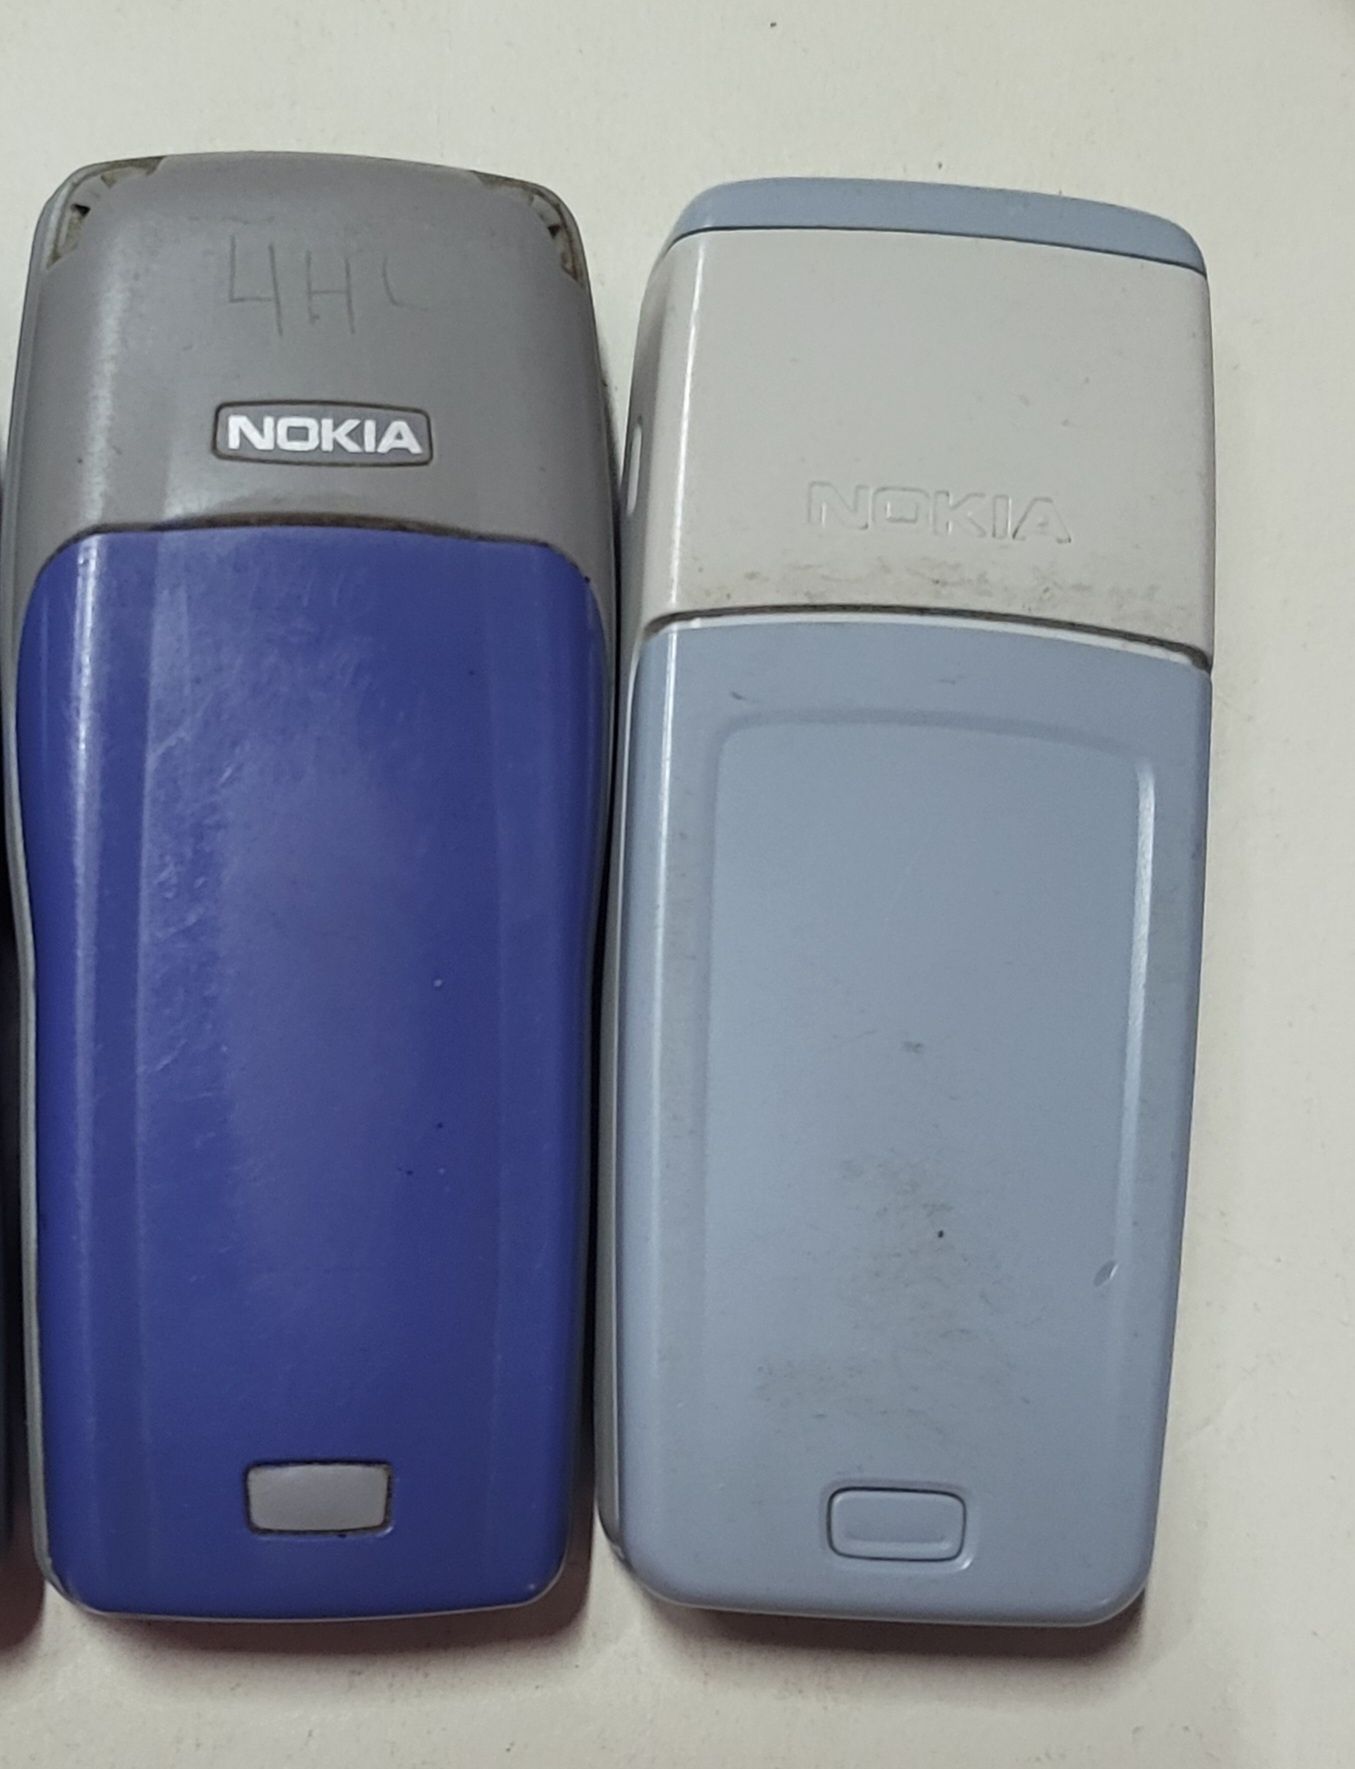 Телефон Nokia 1100 cзарядкой и батареей цена за 1 sharp